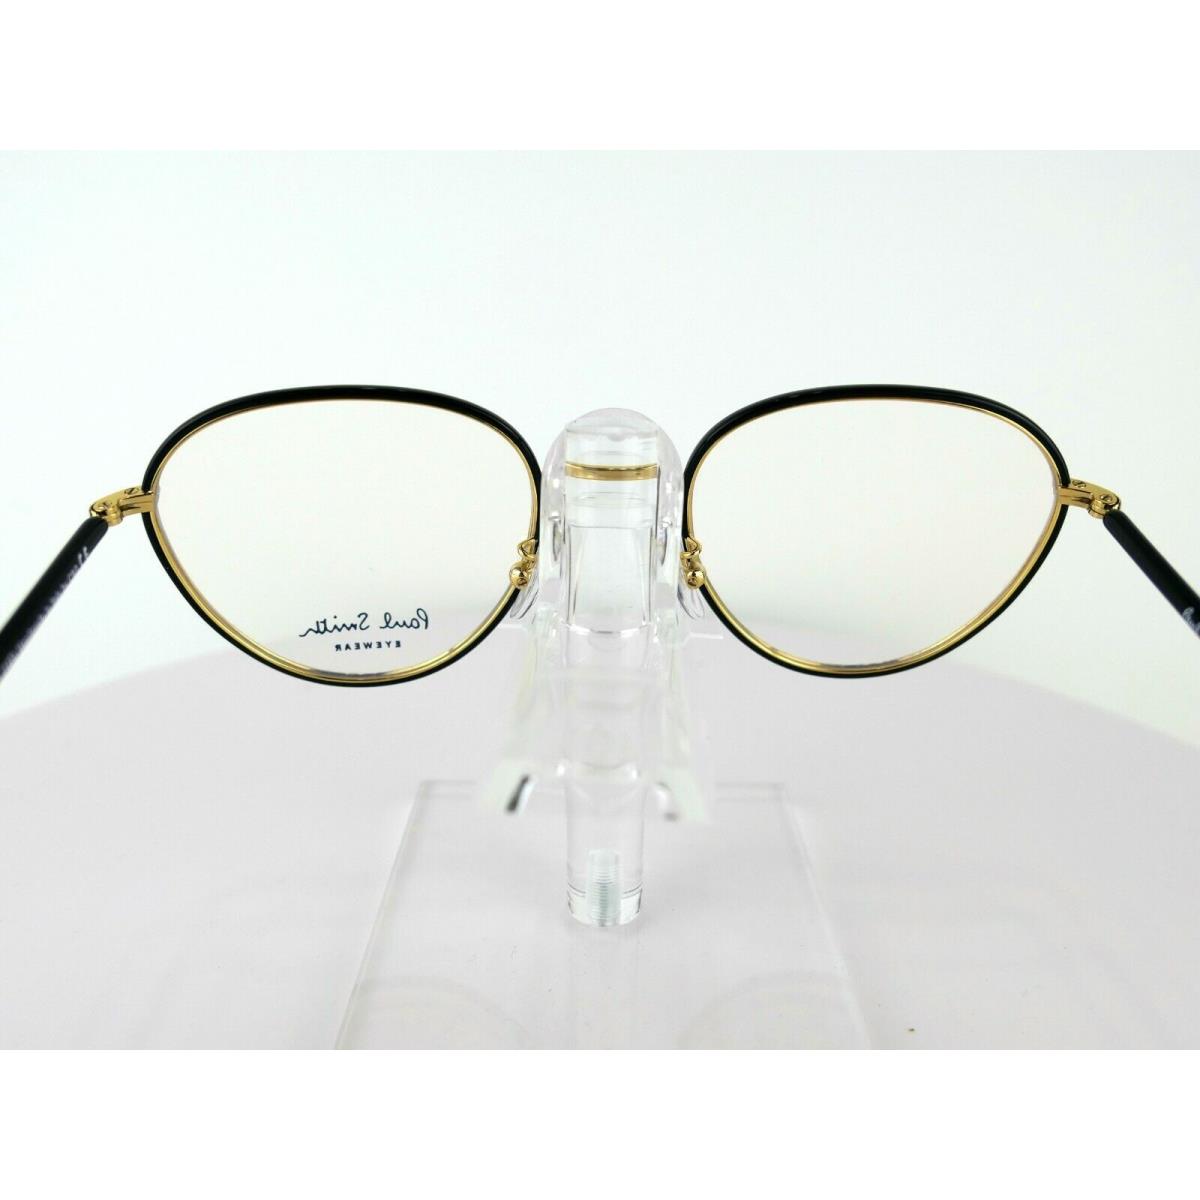 Paul Smith eyeglasses ALBION - Black, Frame: (01) Black Ink / Gold Accents 4